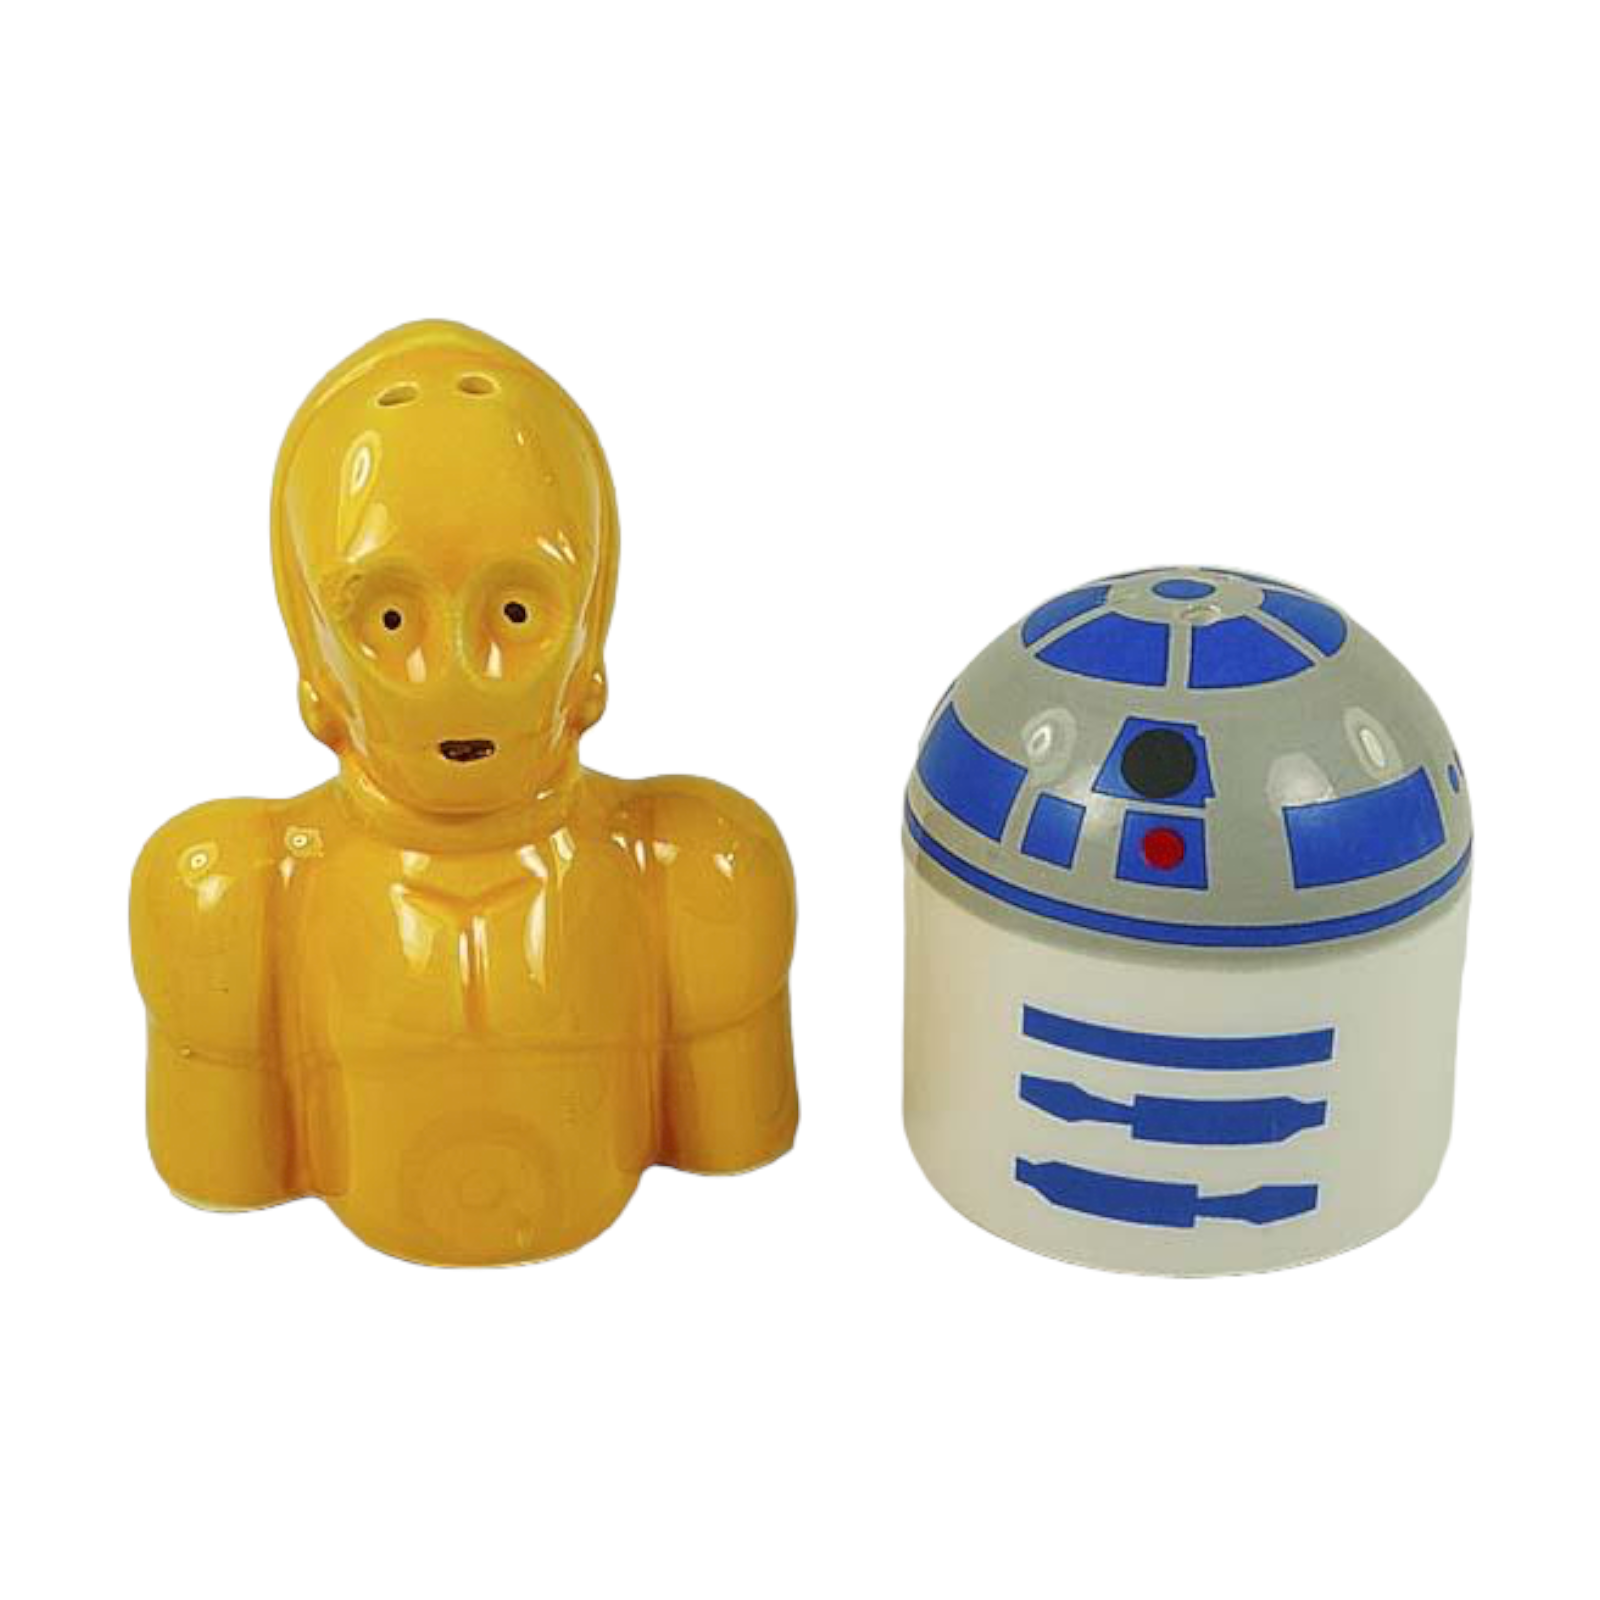 Star Wars Salt and Pepper Shaker Set - Ceramic C3PO and R2D2